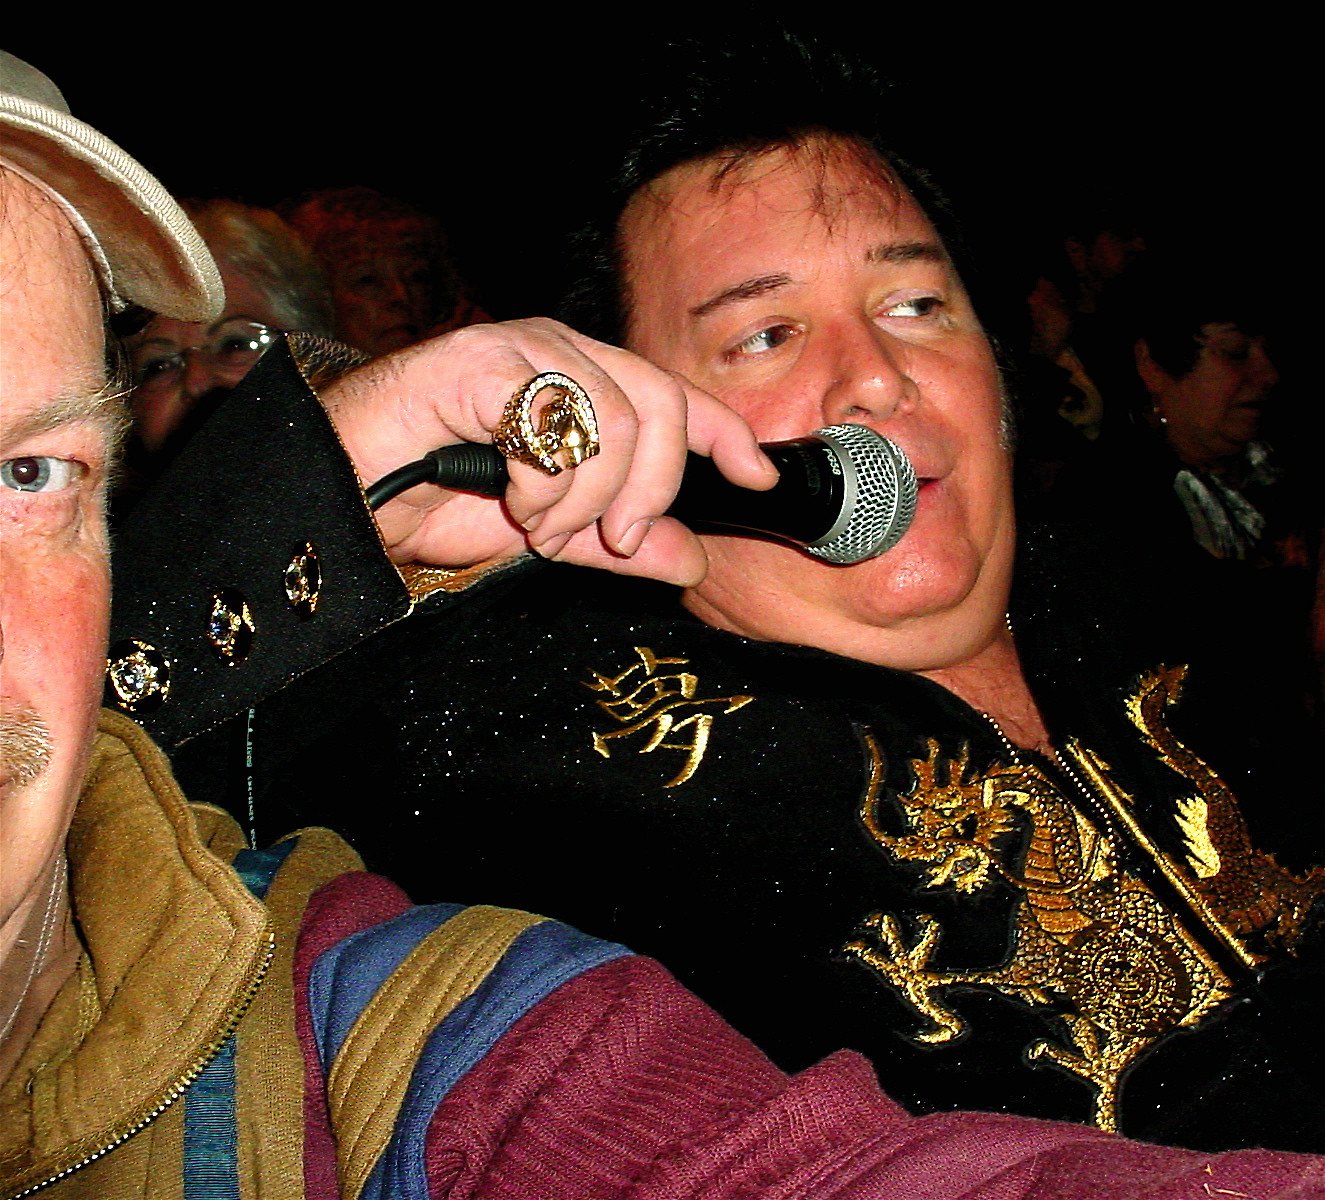 Dave Humphrey and Elvis Aaron Presley Jr. in an image taken on April 27, 2012. | Source: Flickr/Dave